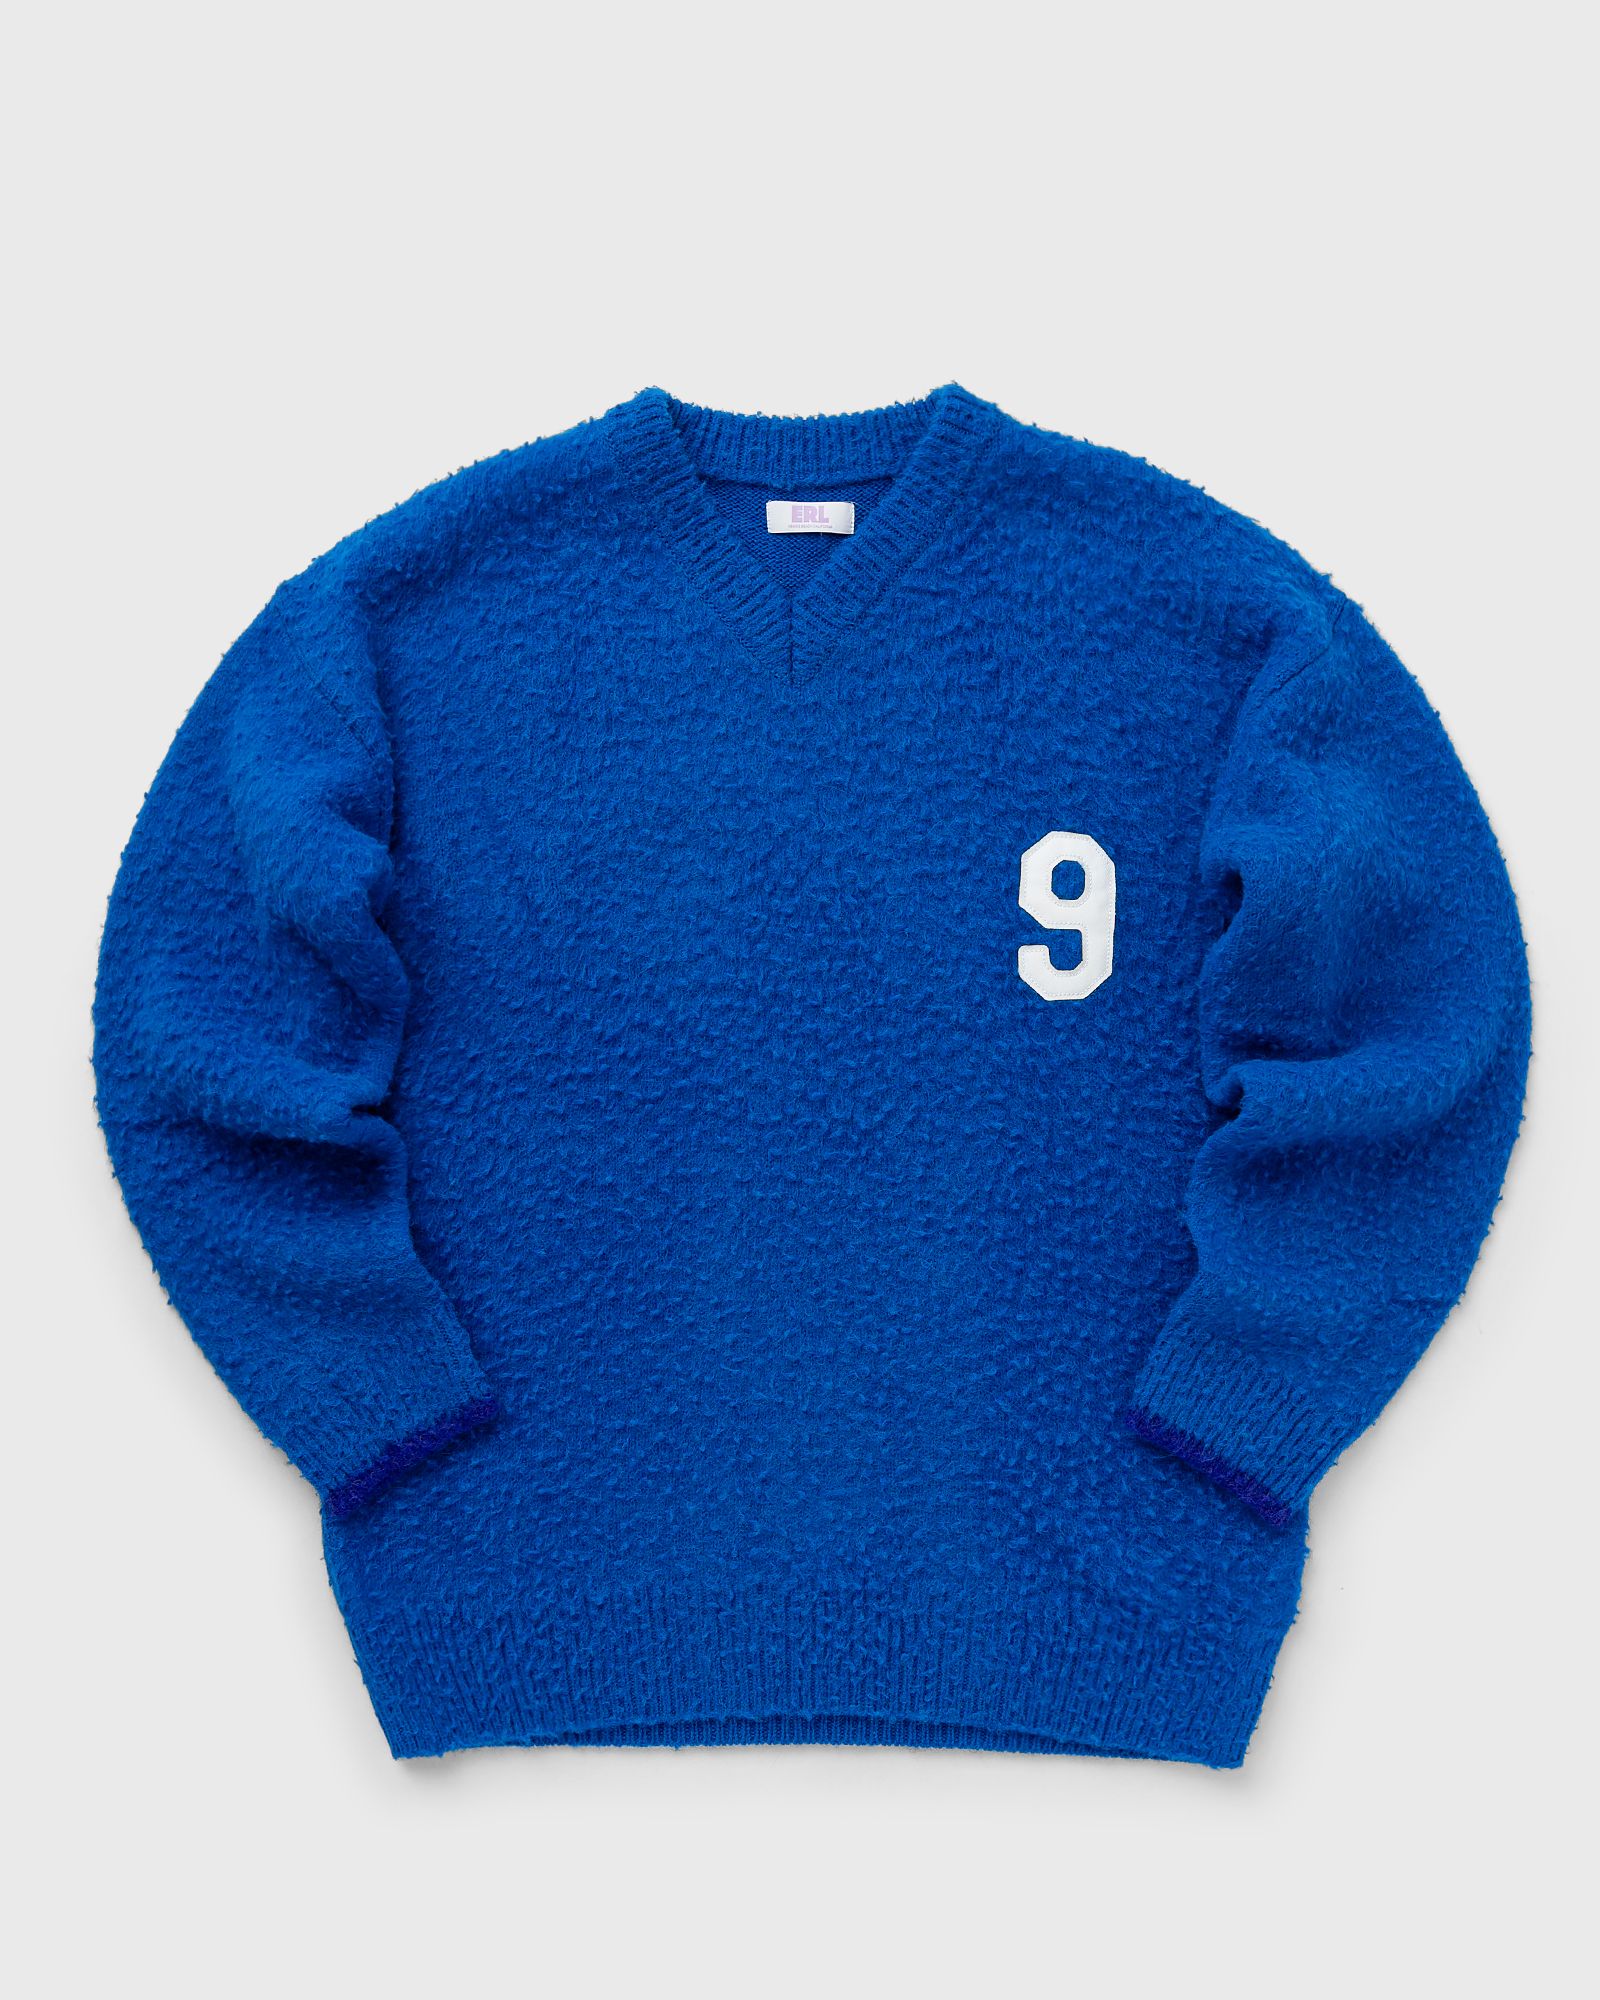 ERL - football vneck sweater knit men pullovers blue in größe:xl